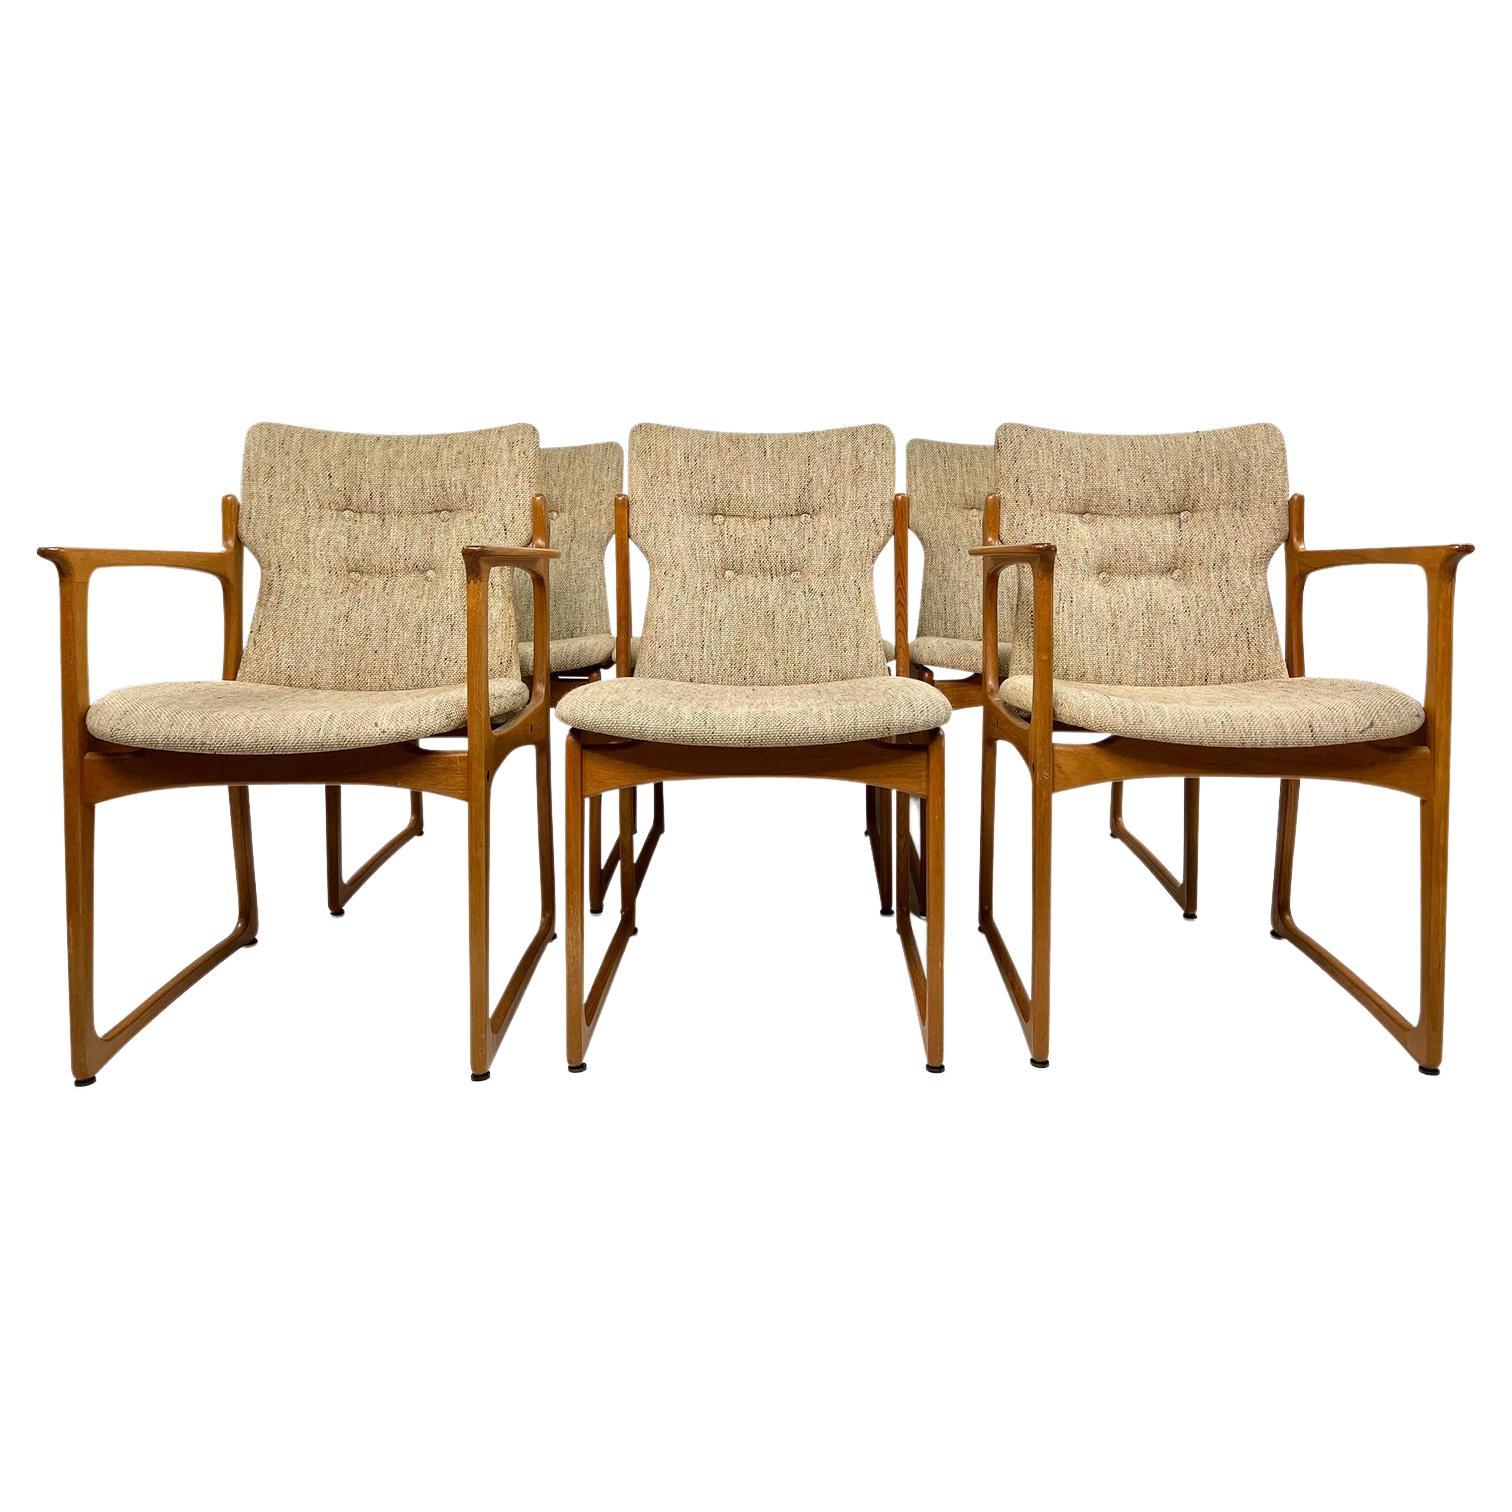 Mid-Century Modern Vamdrup Stolefabrik Teak Dining Chairs, Set of 6